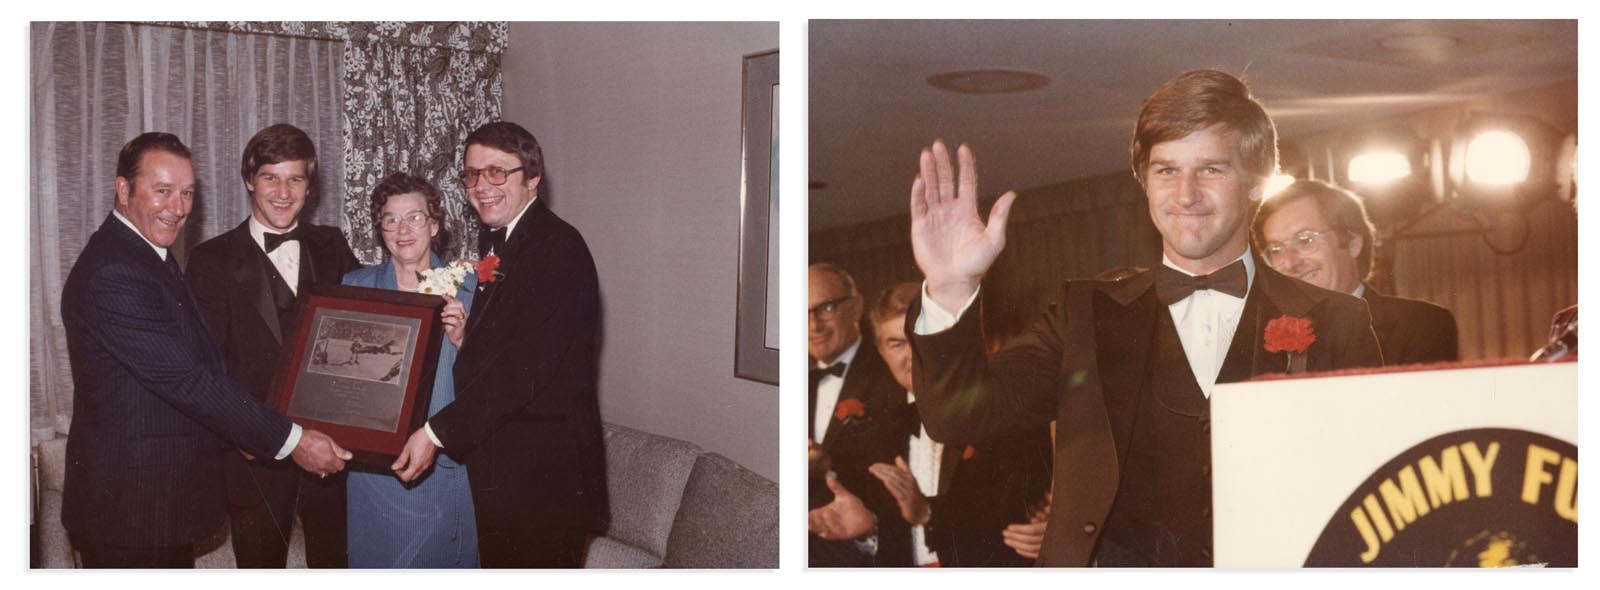 1979 Salute to Bobby Orr Presentation Photo Album